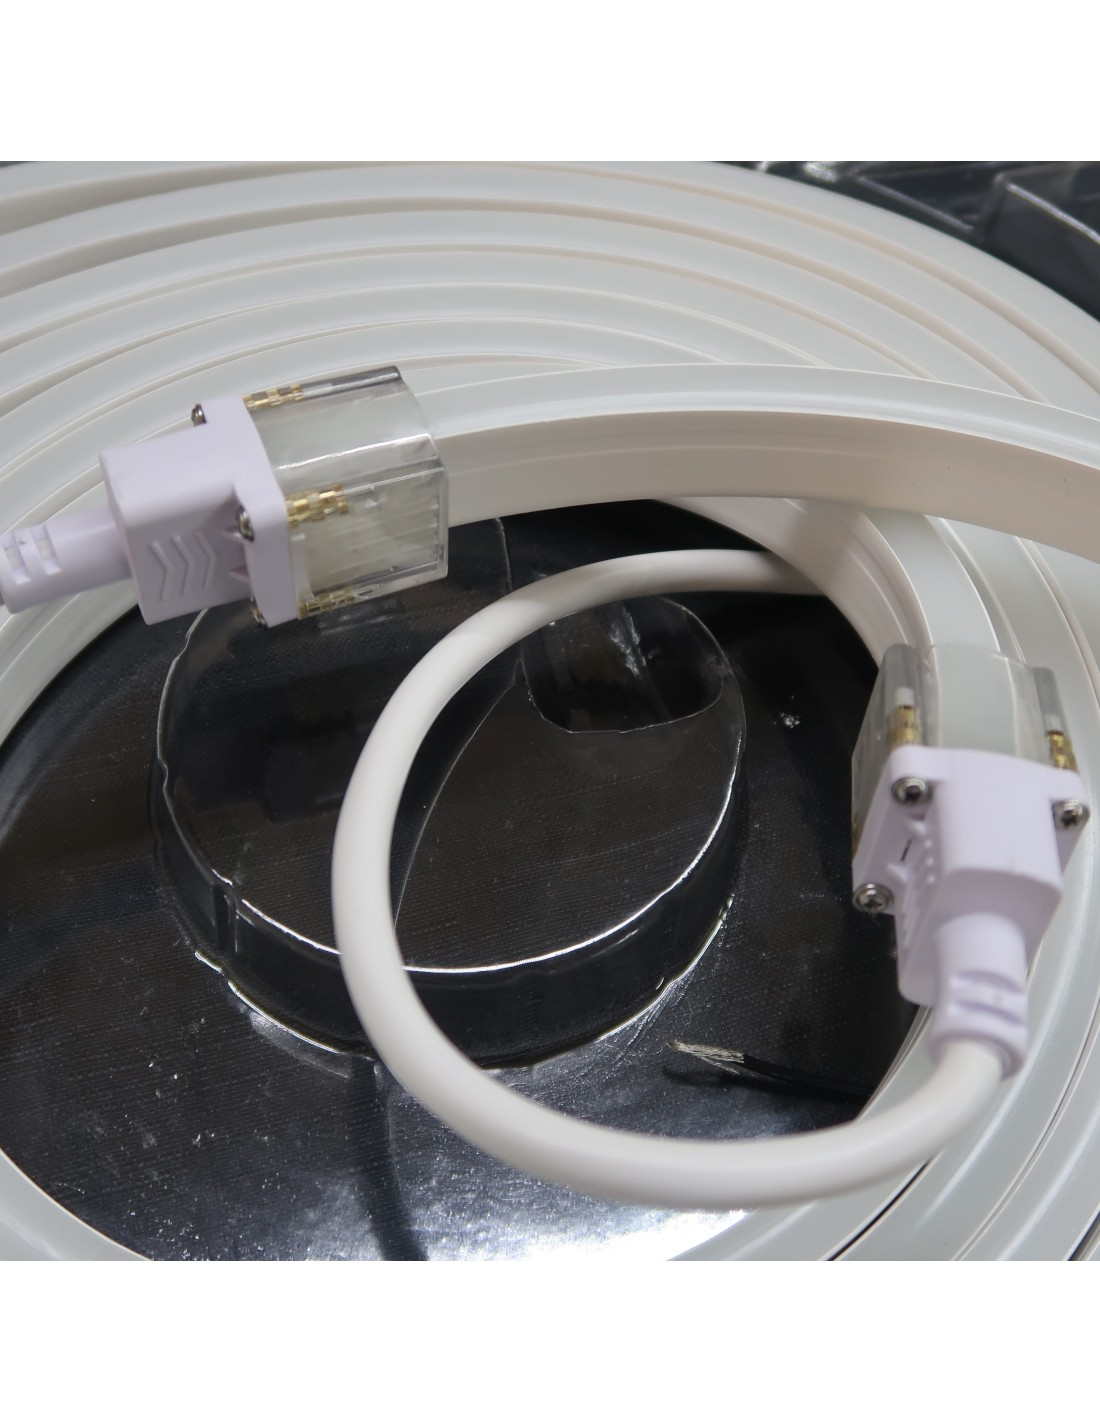 Neon LED Strip Lights - Side Bend Neon Flex - IP65 - 24V - 5m - Warm White